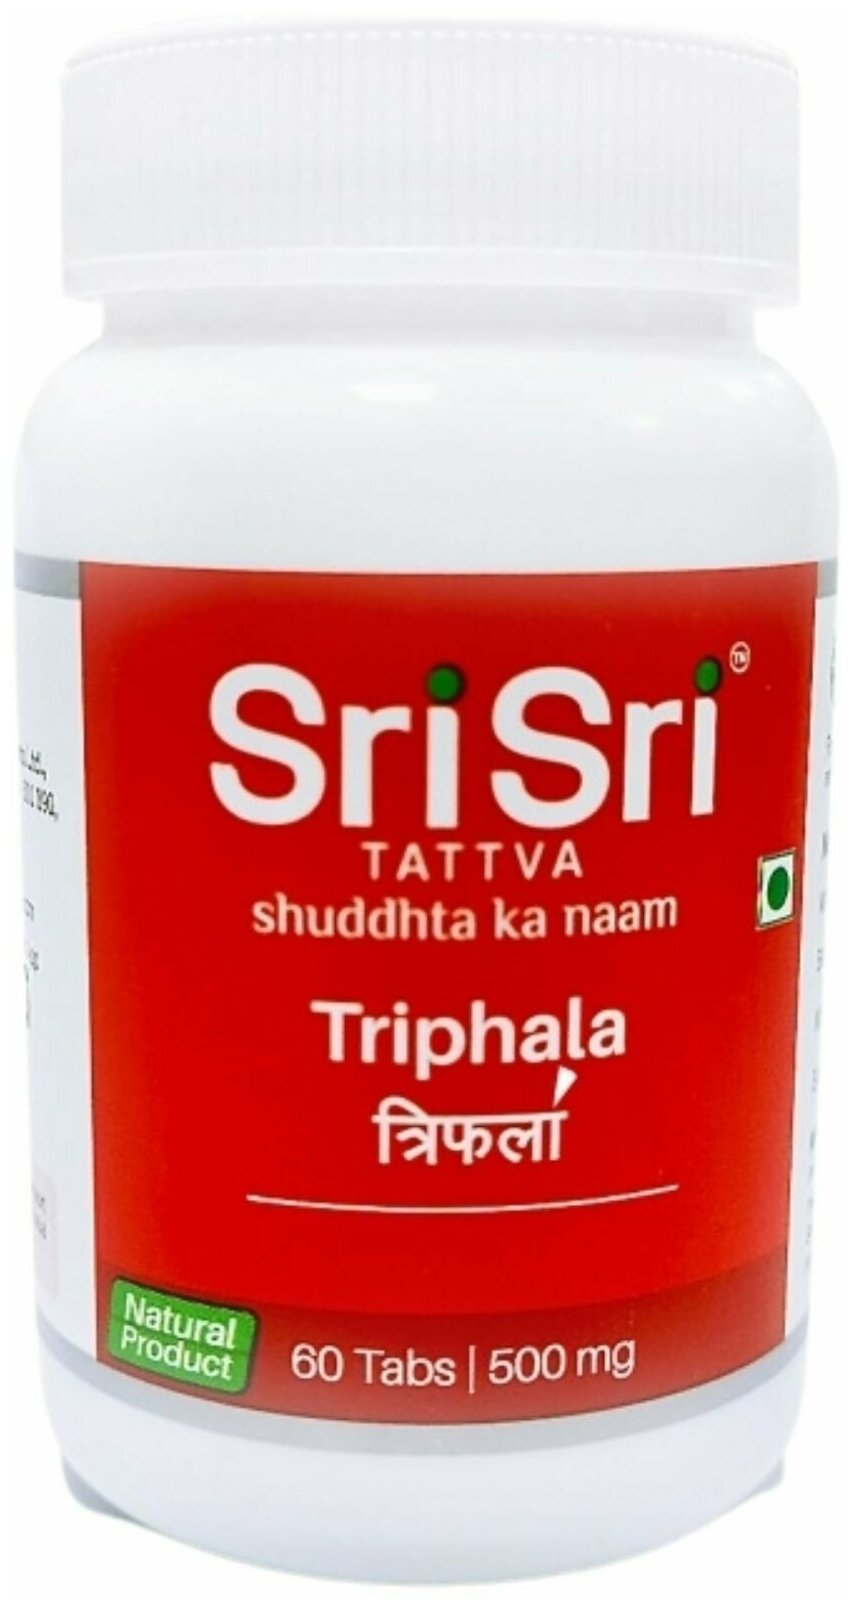 Трифала Шри Шри (Triphala Sri Sri) для очищение и омоложение организма, 60 таб. (500мг)